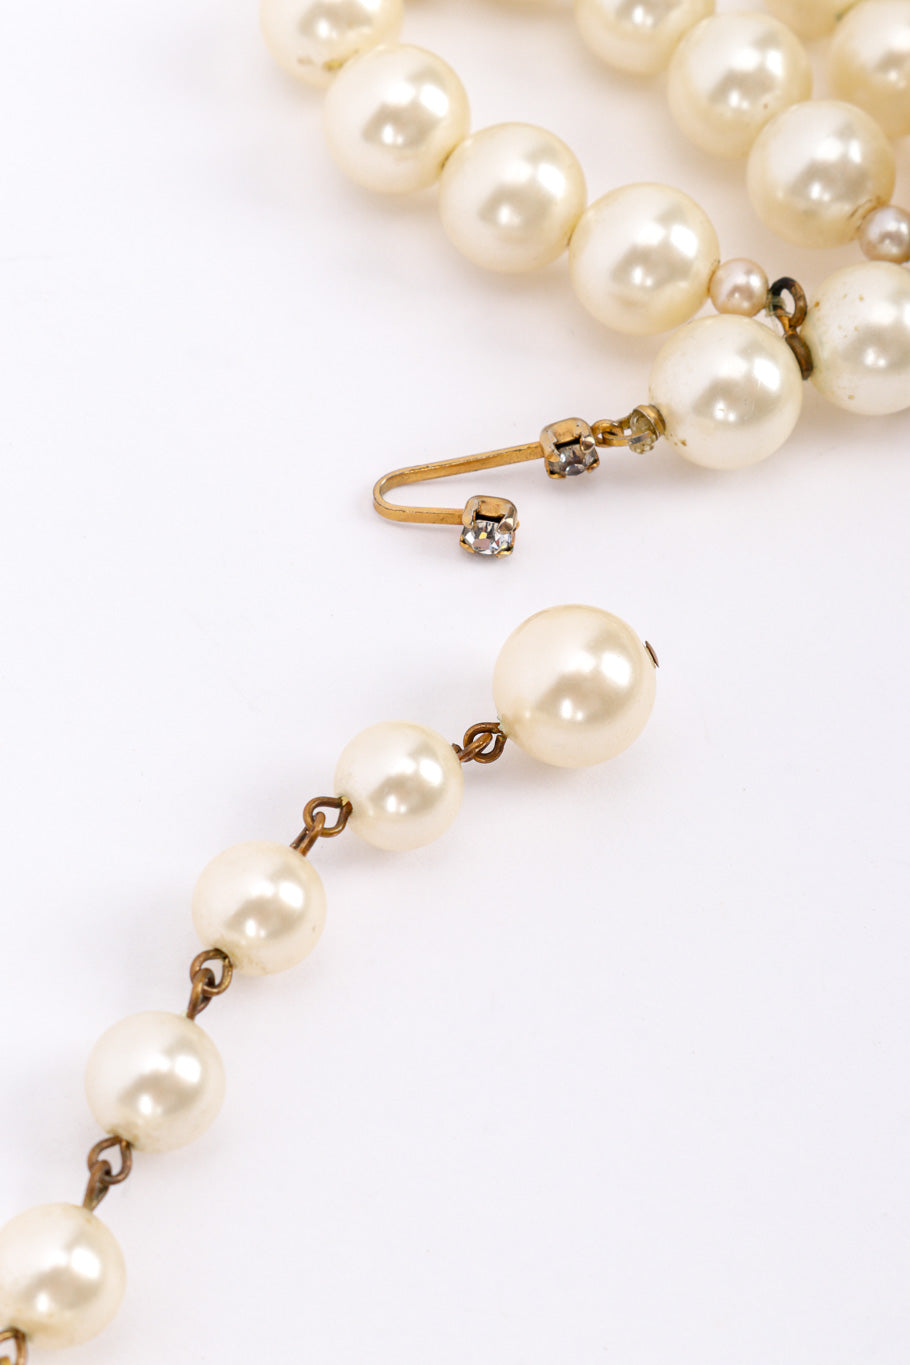 Vintage Marvella Pearl Fringe Collar Necklace hook closure closeup @recessla